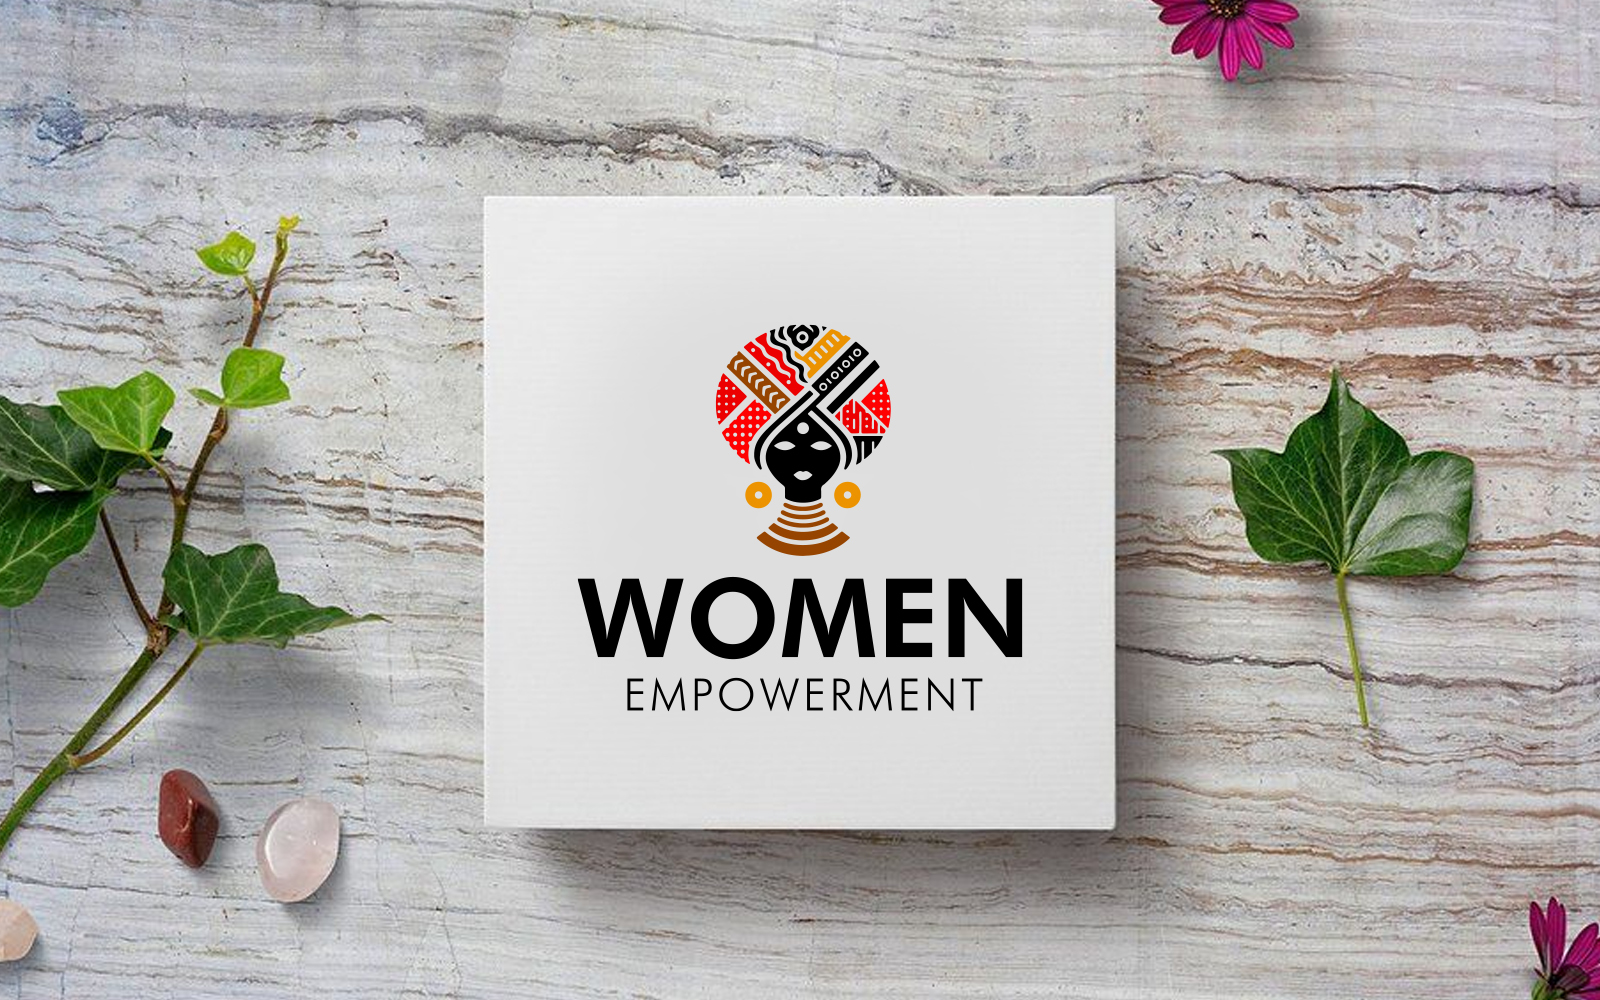 Women's Empowerment Logo Design Using for Women's Day